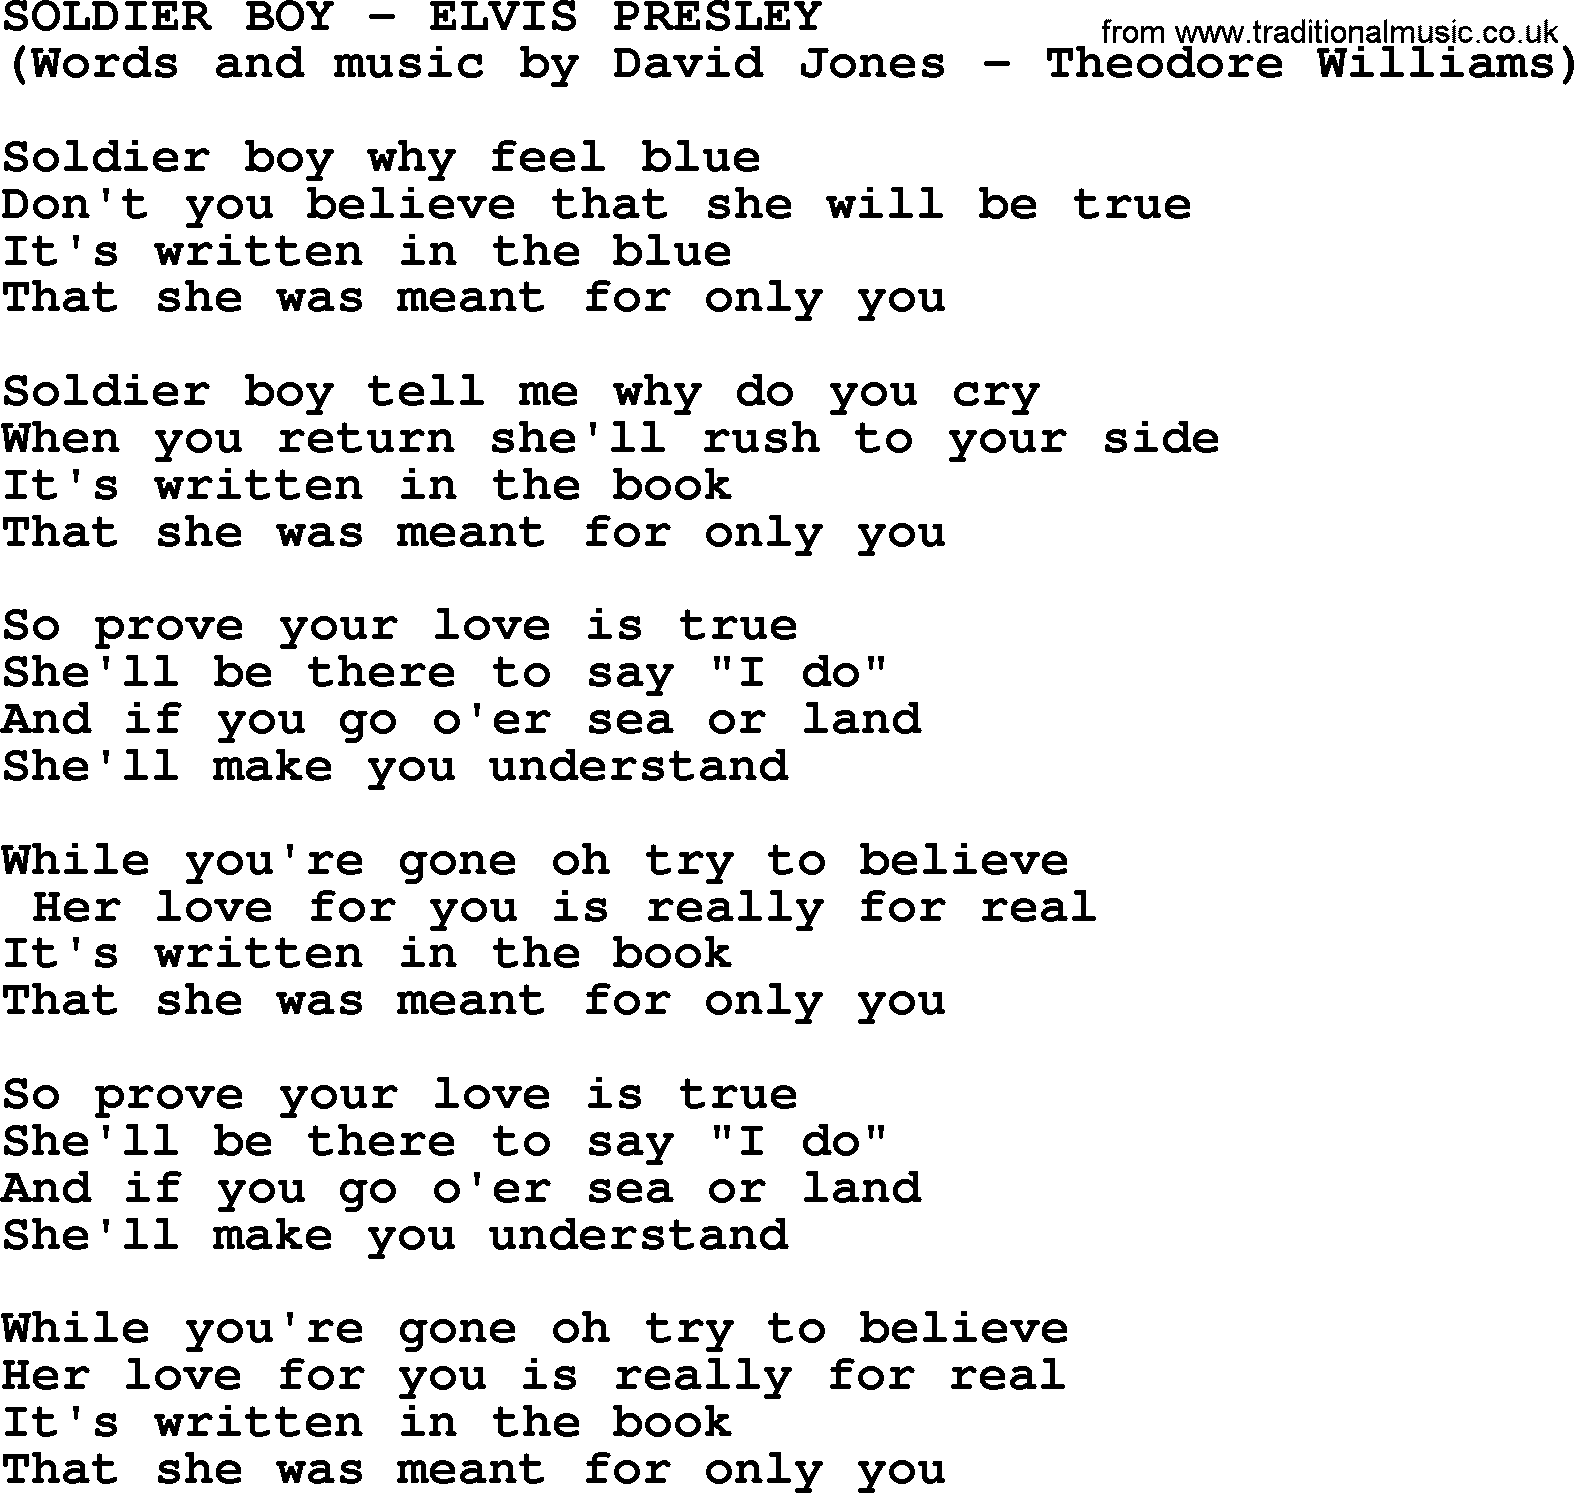 Elvis Presley song: Soldier Boy lyrics